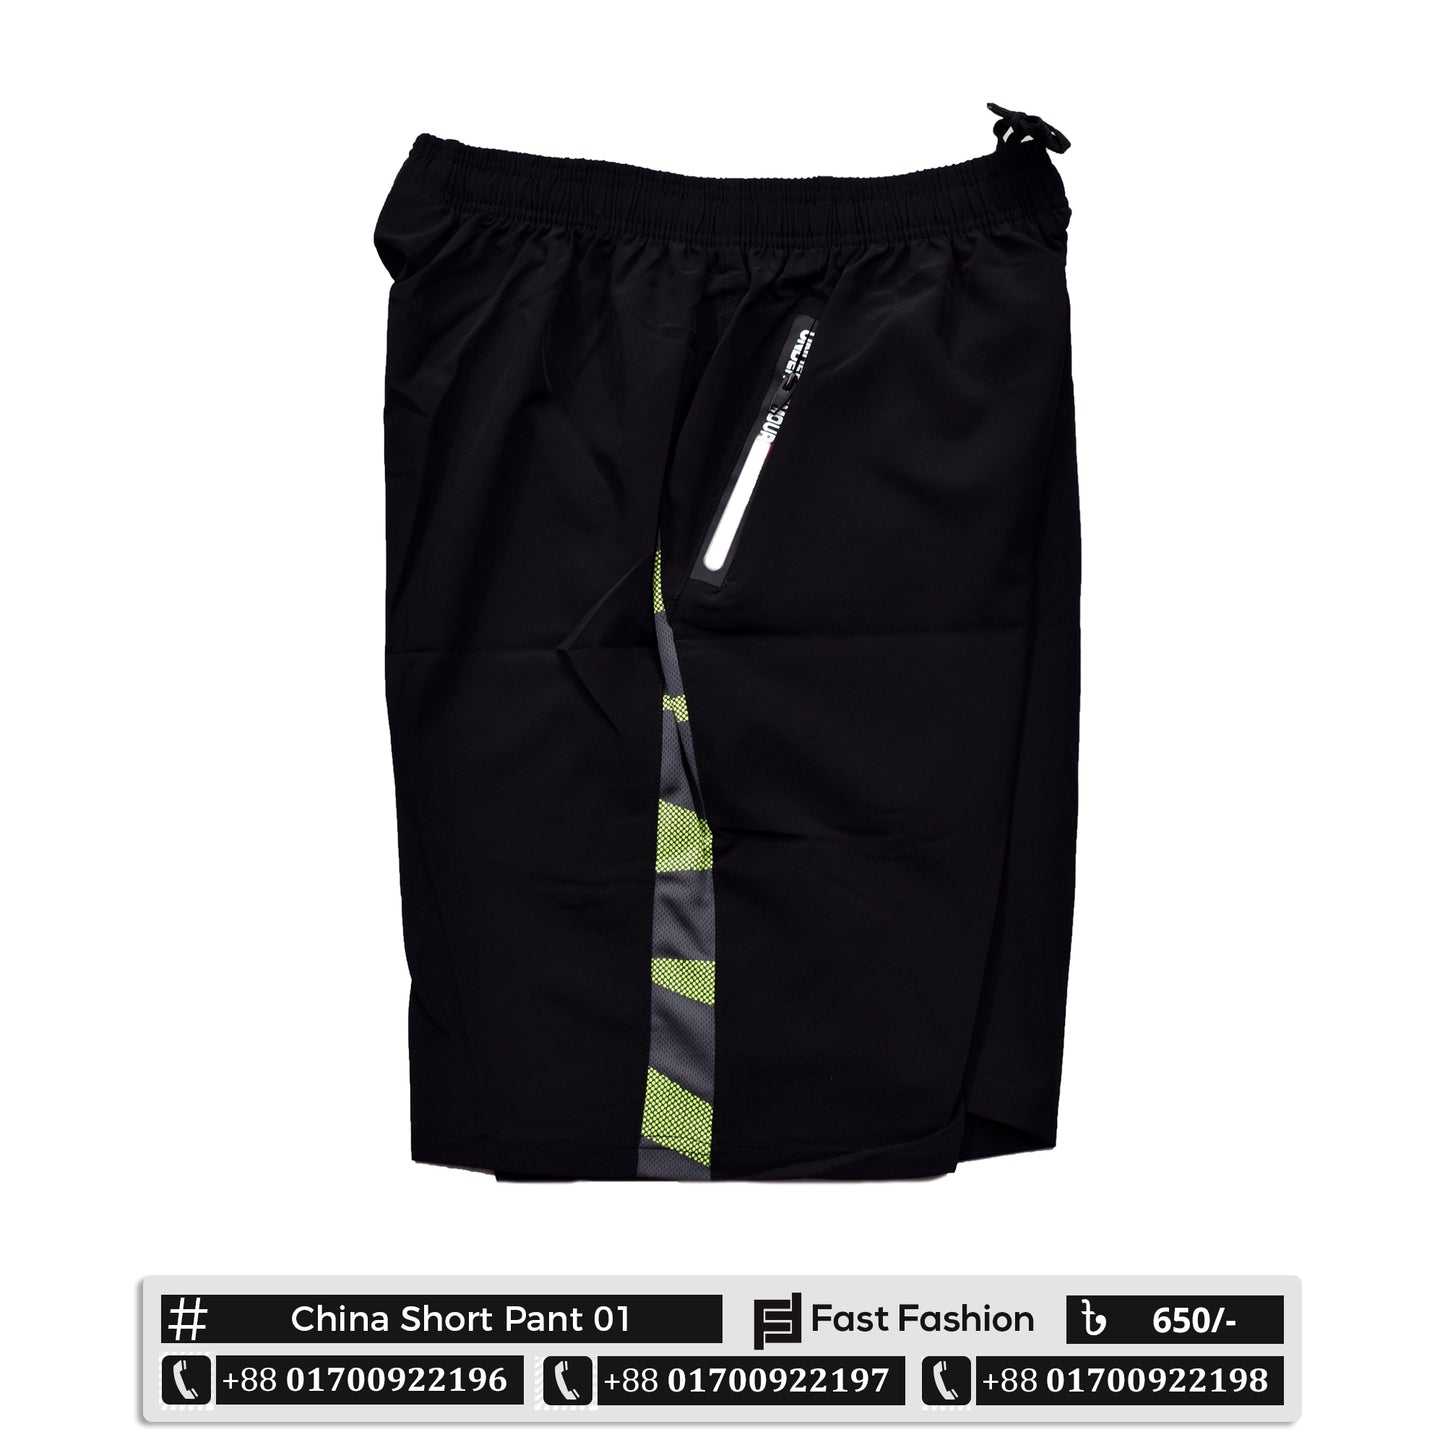 China Short Pant | Premium Quality Short Pant | China Short Pant 01